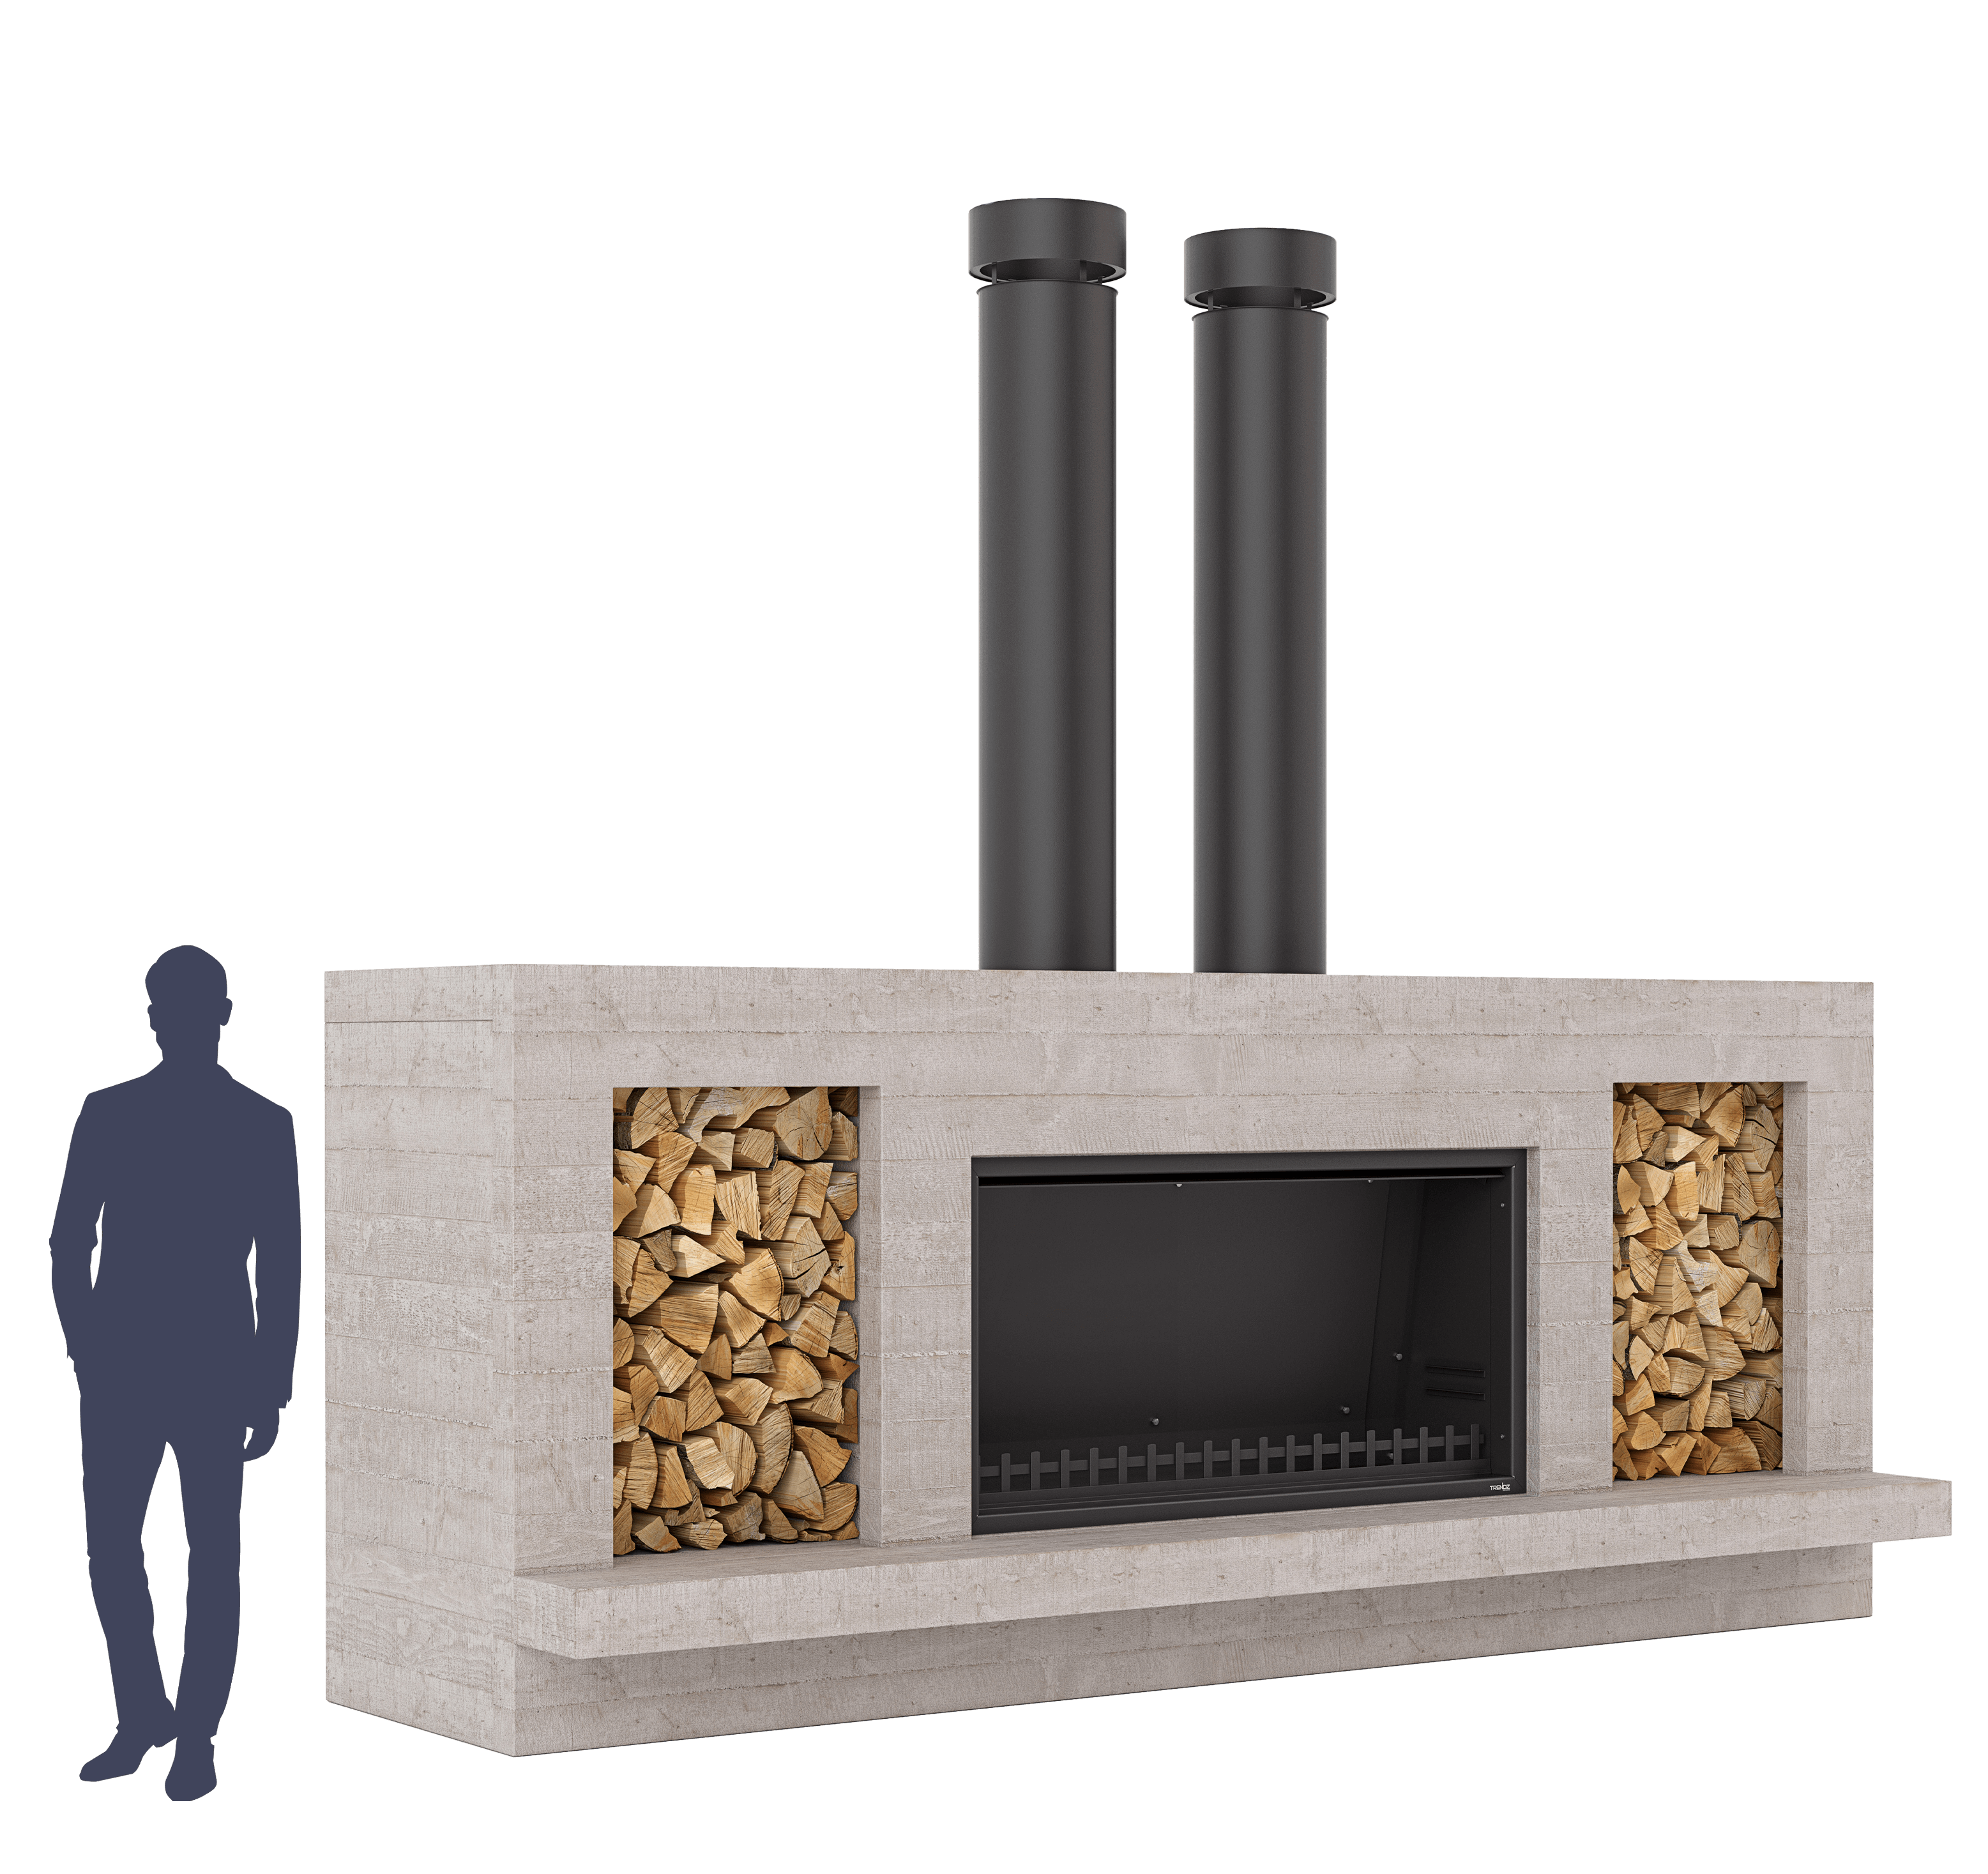 Twin Peak outdoor fireplace design